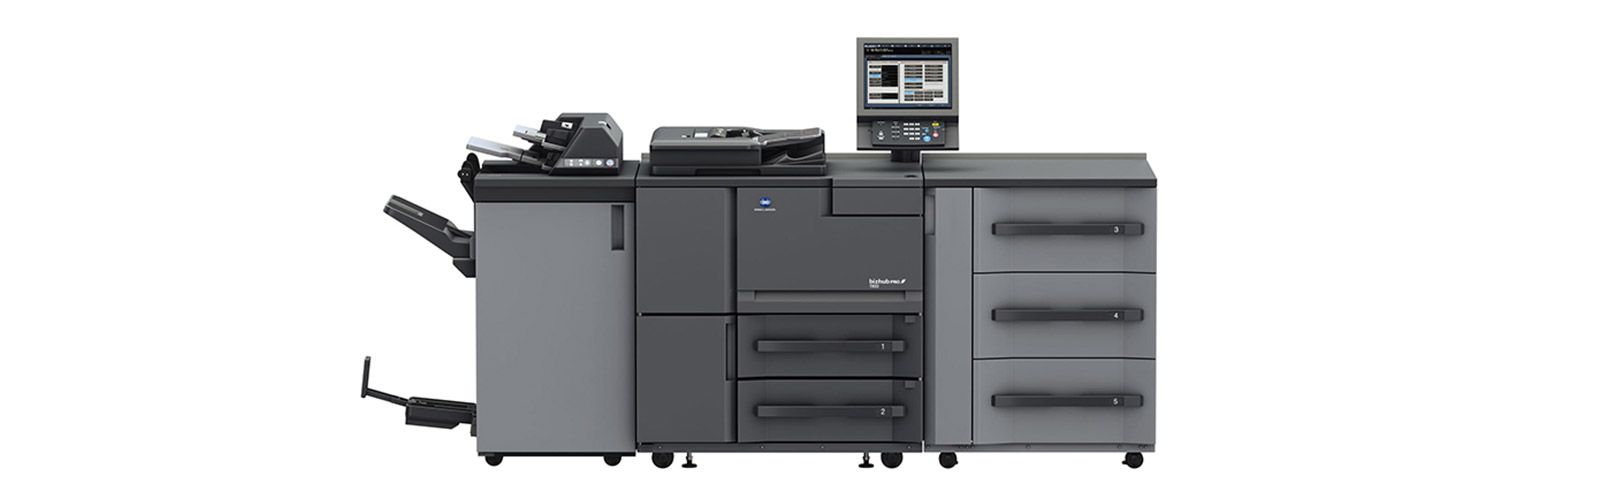 Konica Minolta bizhub PRO 1100 Production Print System